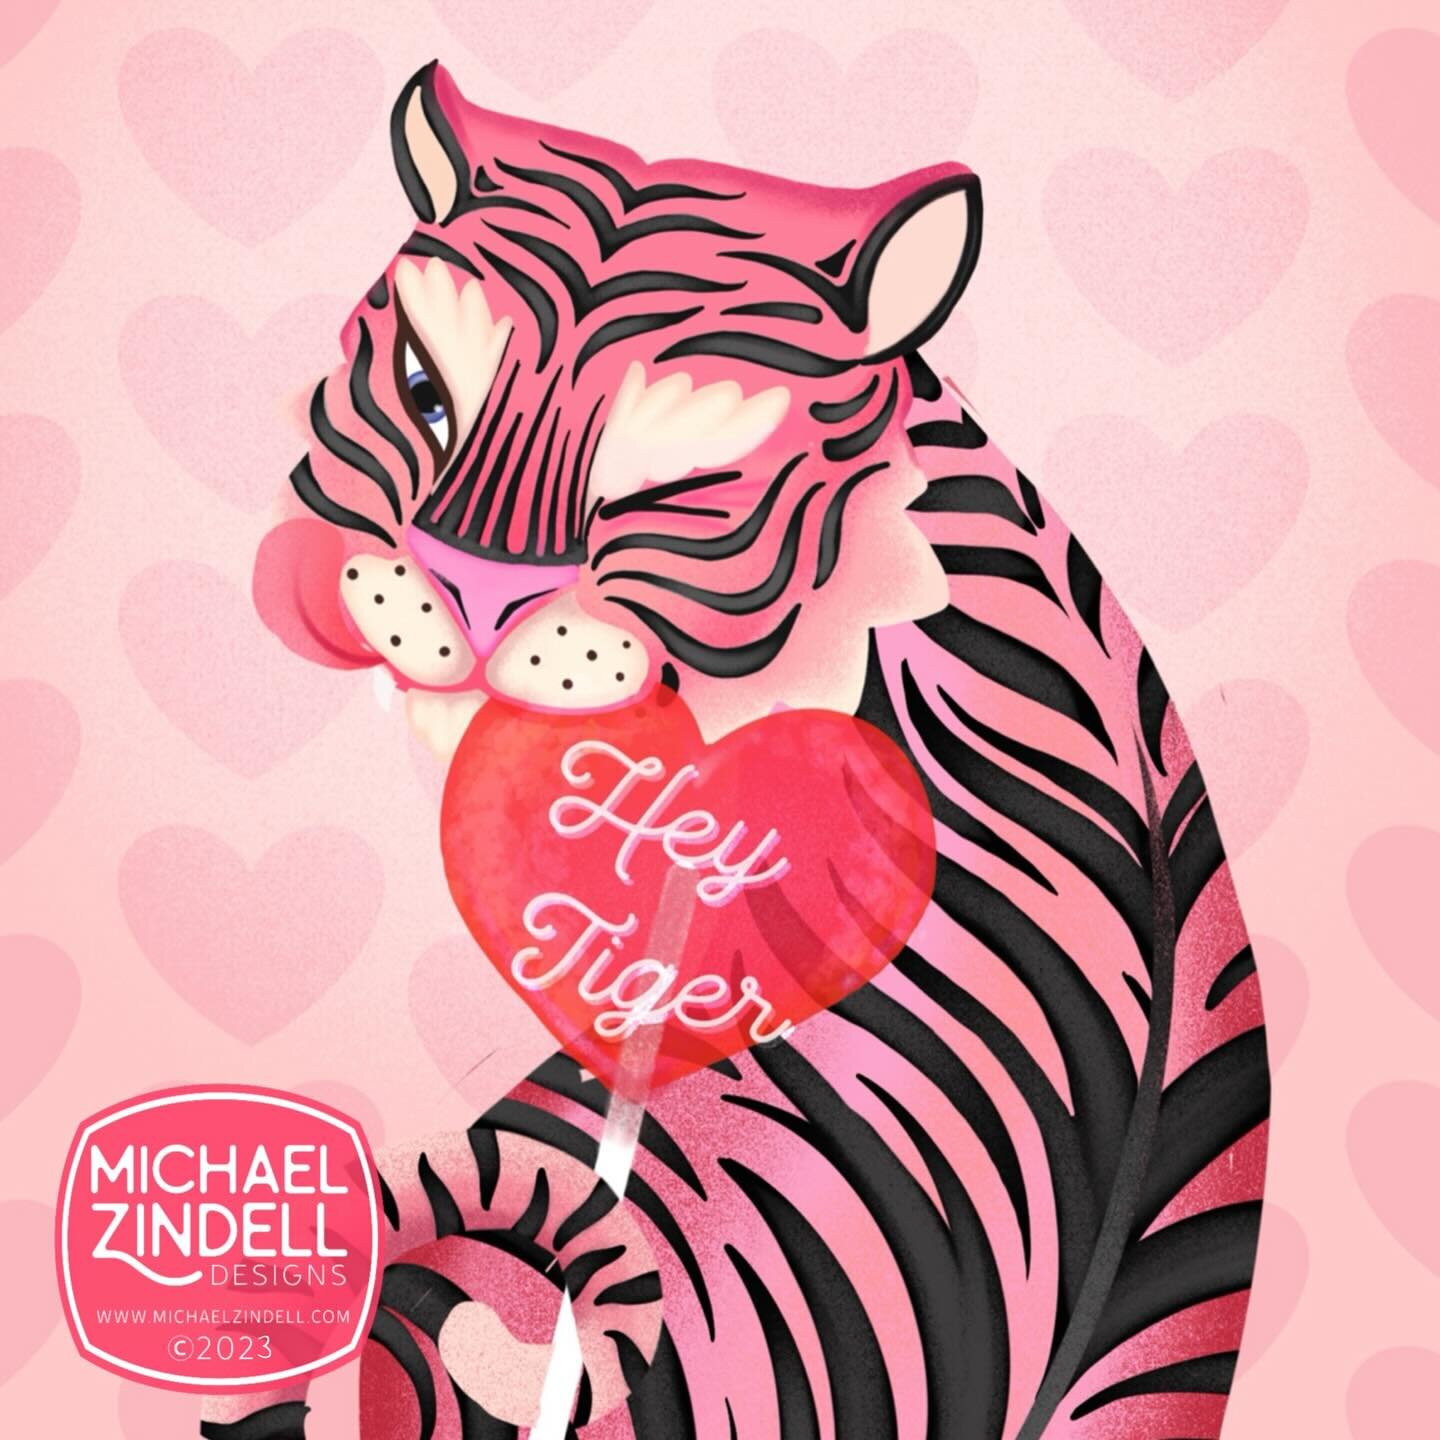 Hey Tiger! #valentinesart #valentines_day #pinktiger #heartshapedcandy